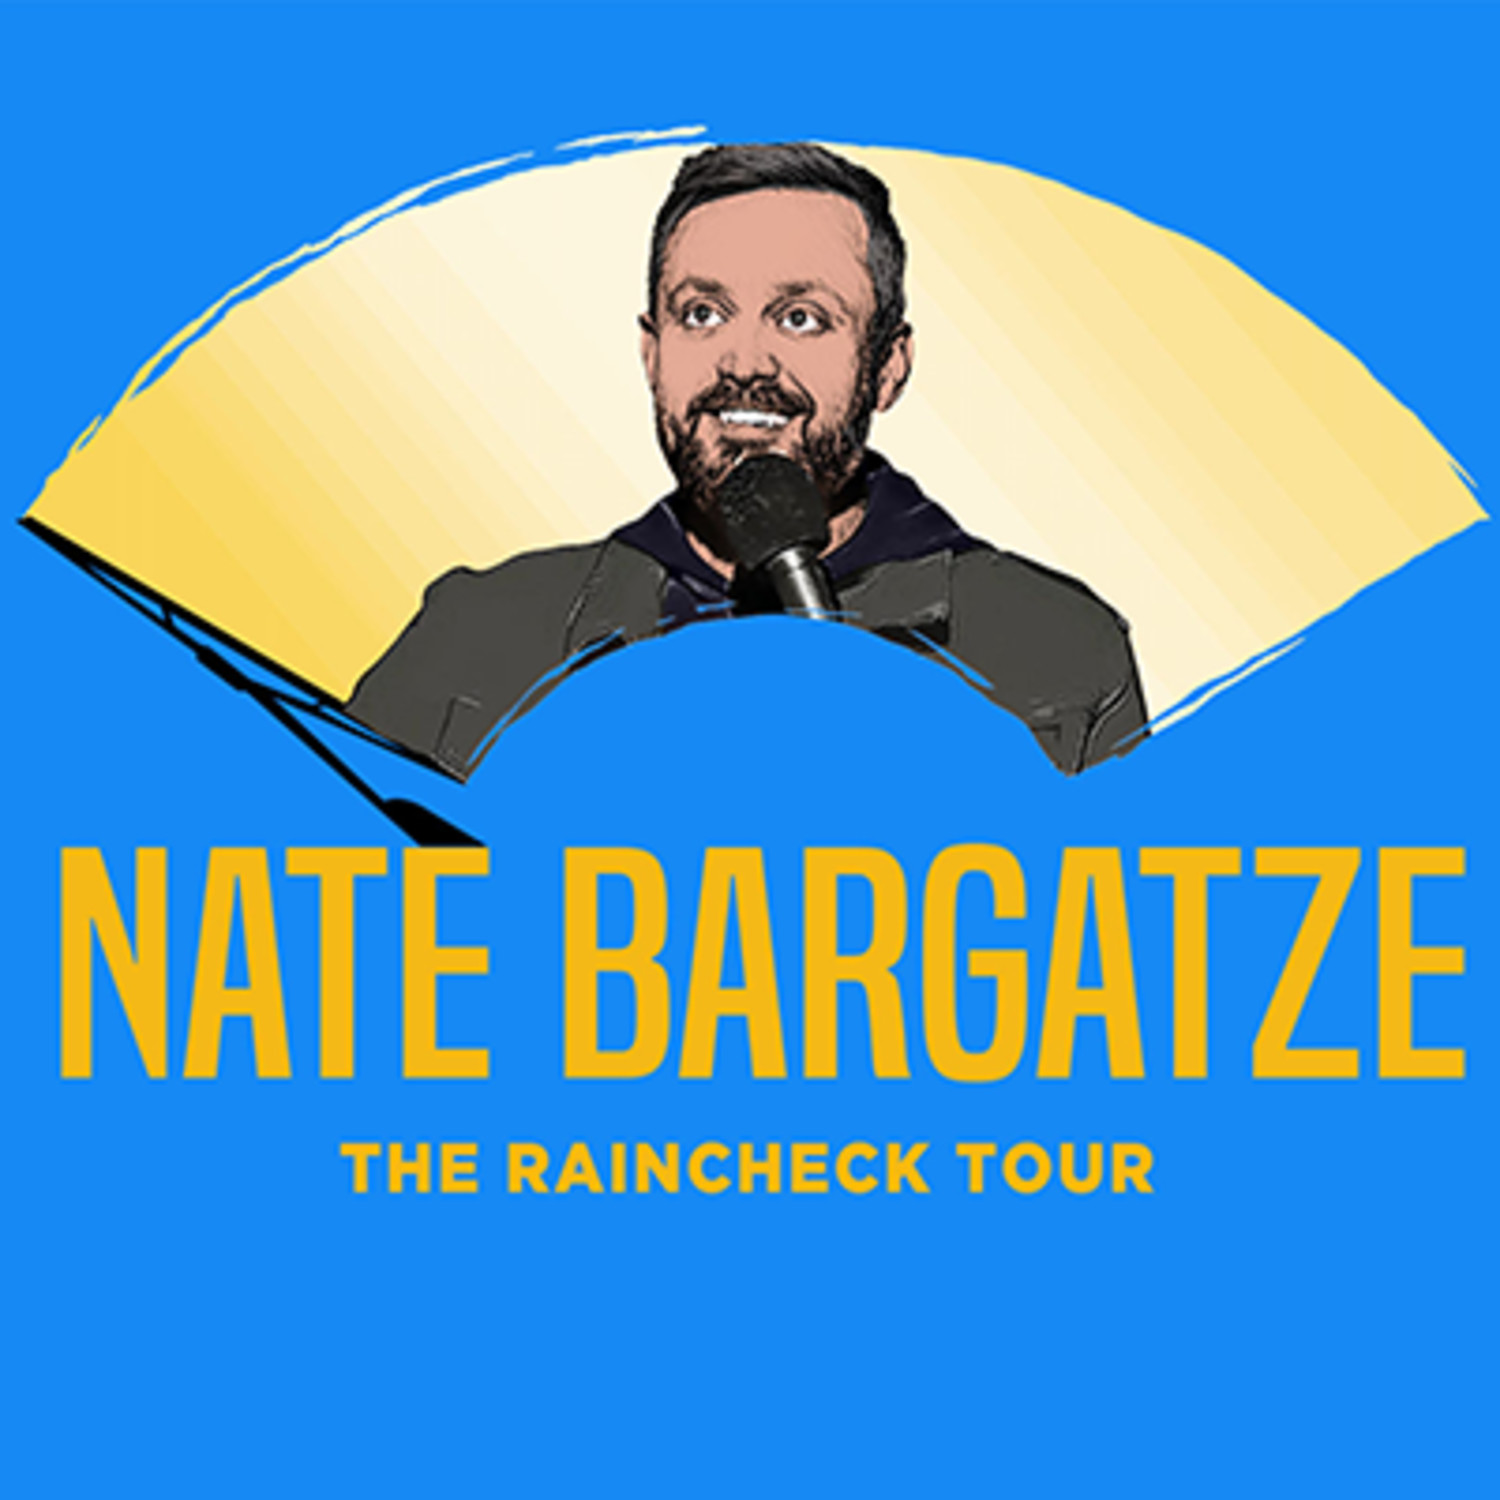 nate bargatze raincheck tour length